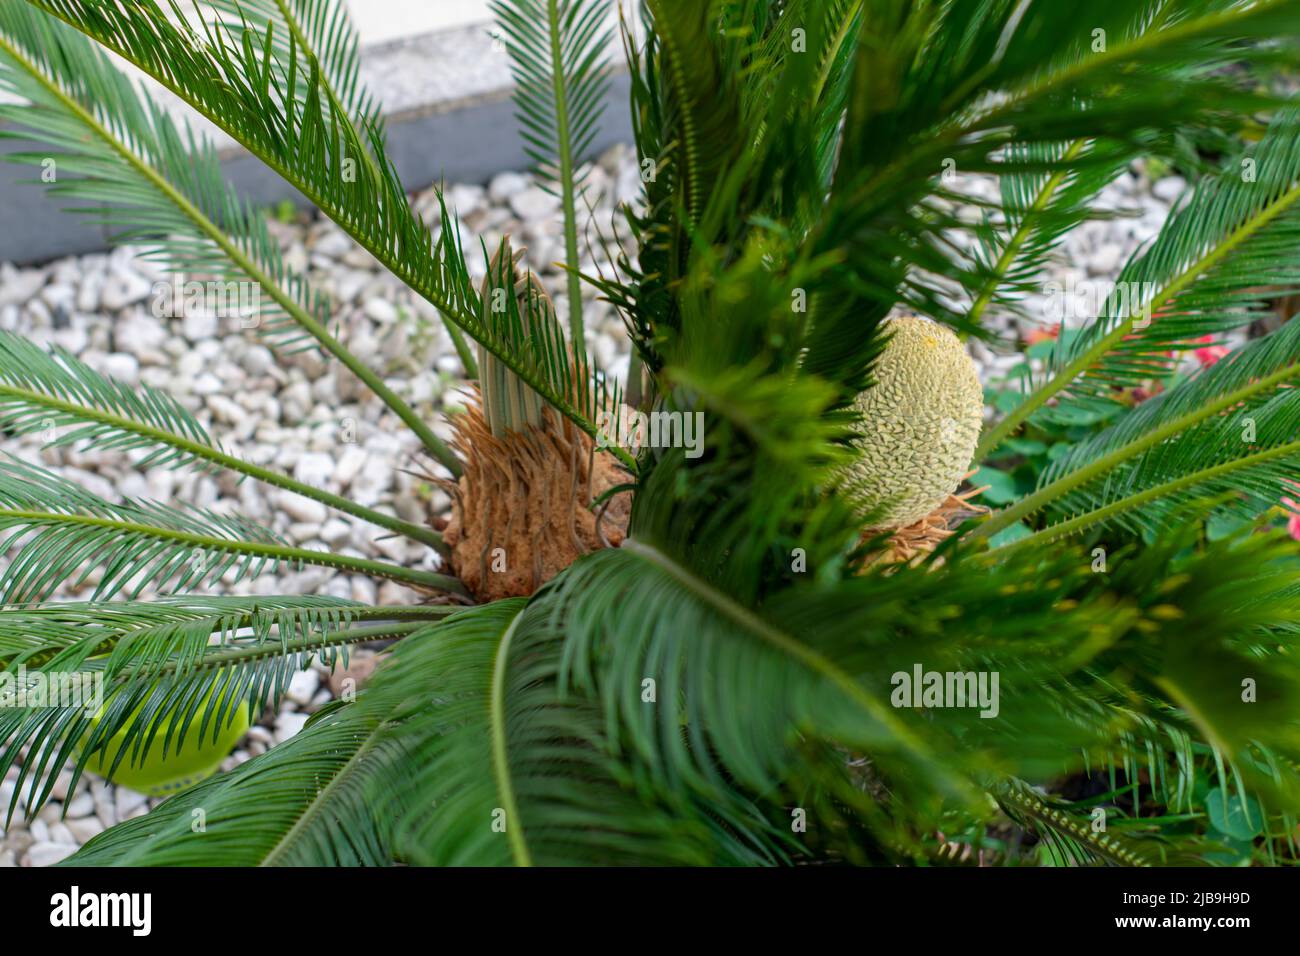 Cycas Revoluta palm with two heads. Garden big plants. Stock Photo